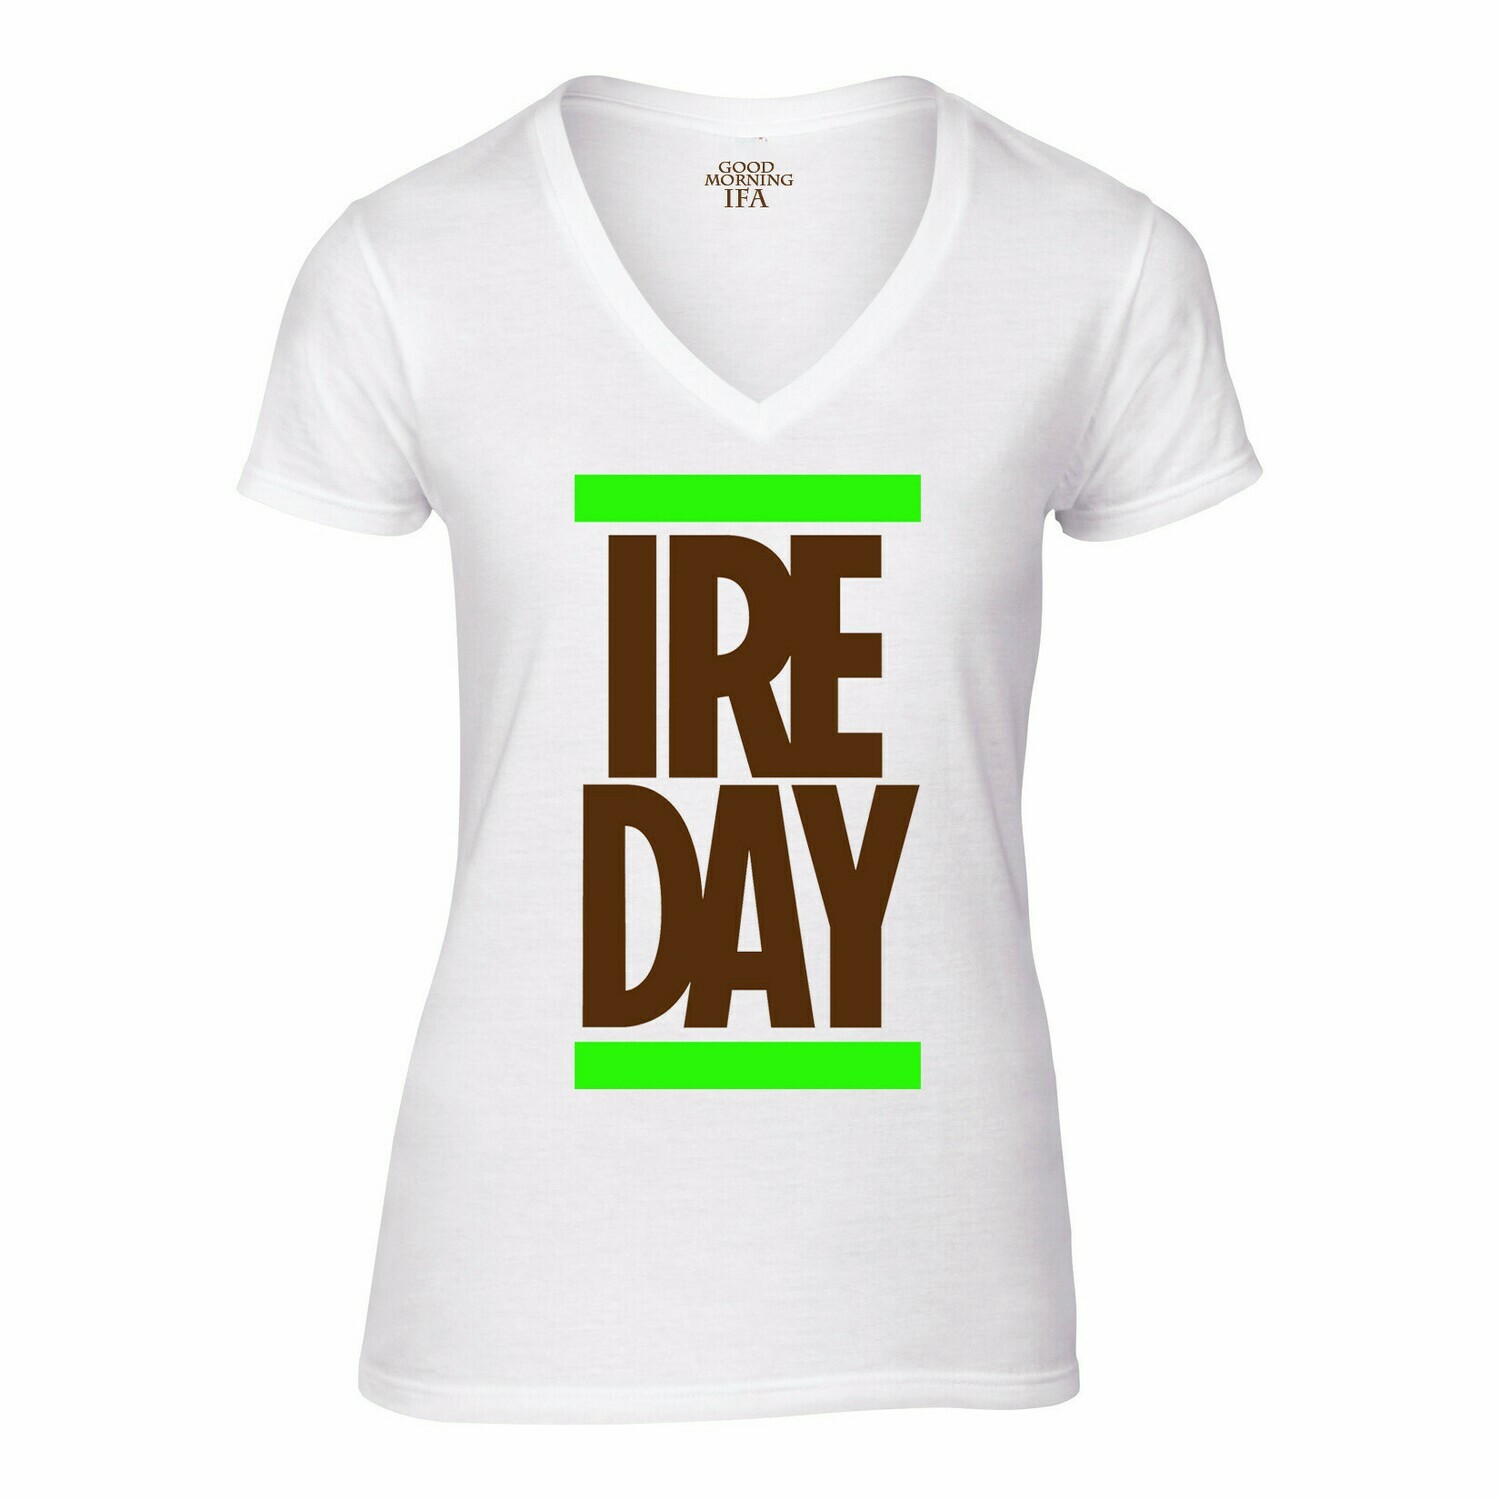 Iya IRE DAY T-Shirt